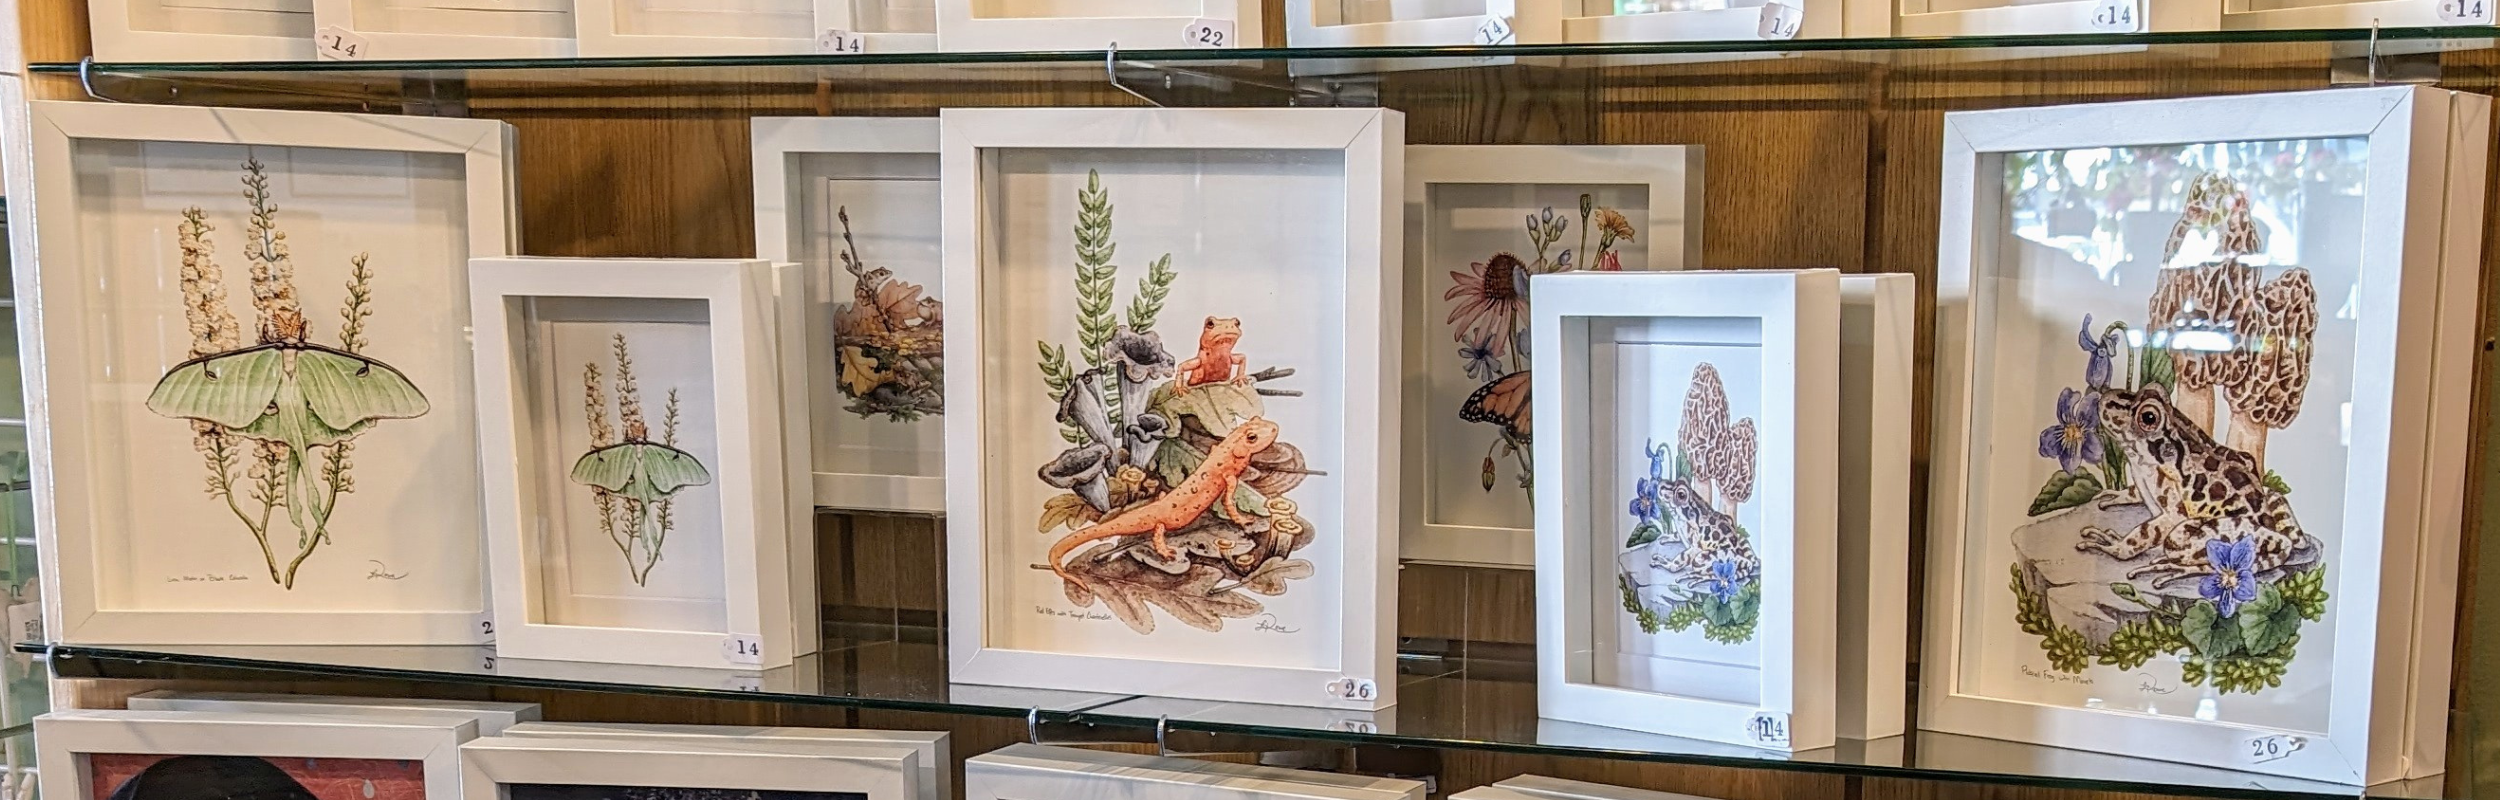 Framed Nature Prints on a Clear Shelf